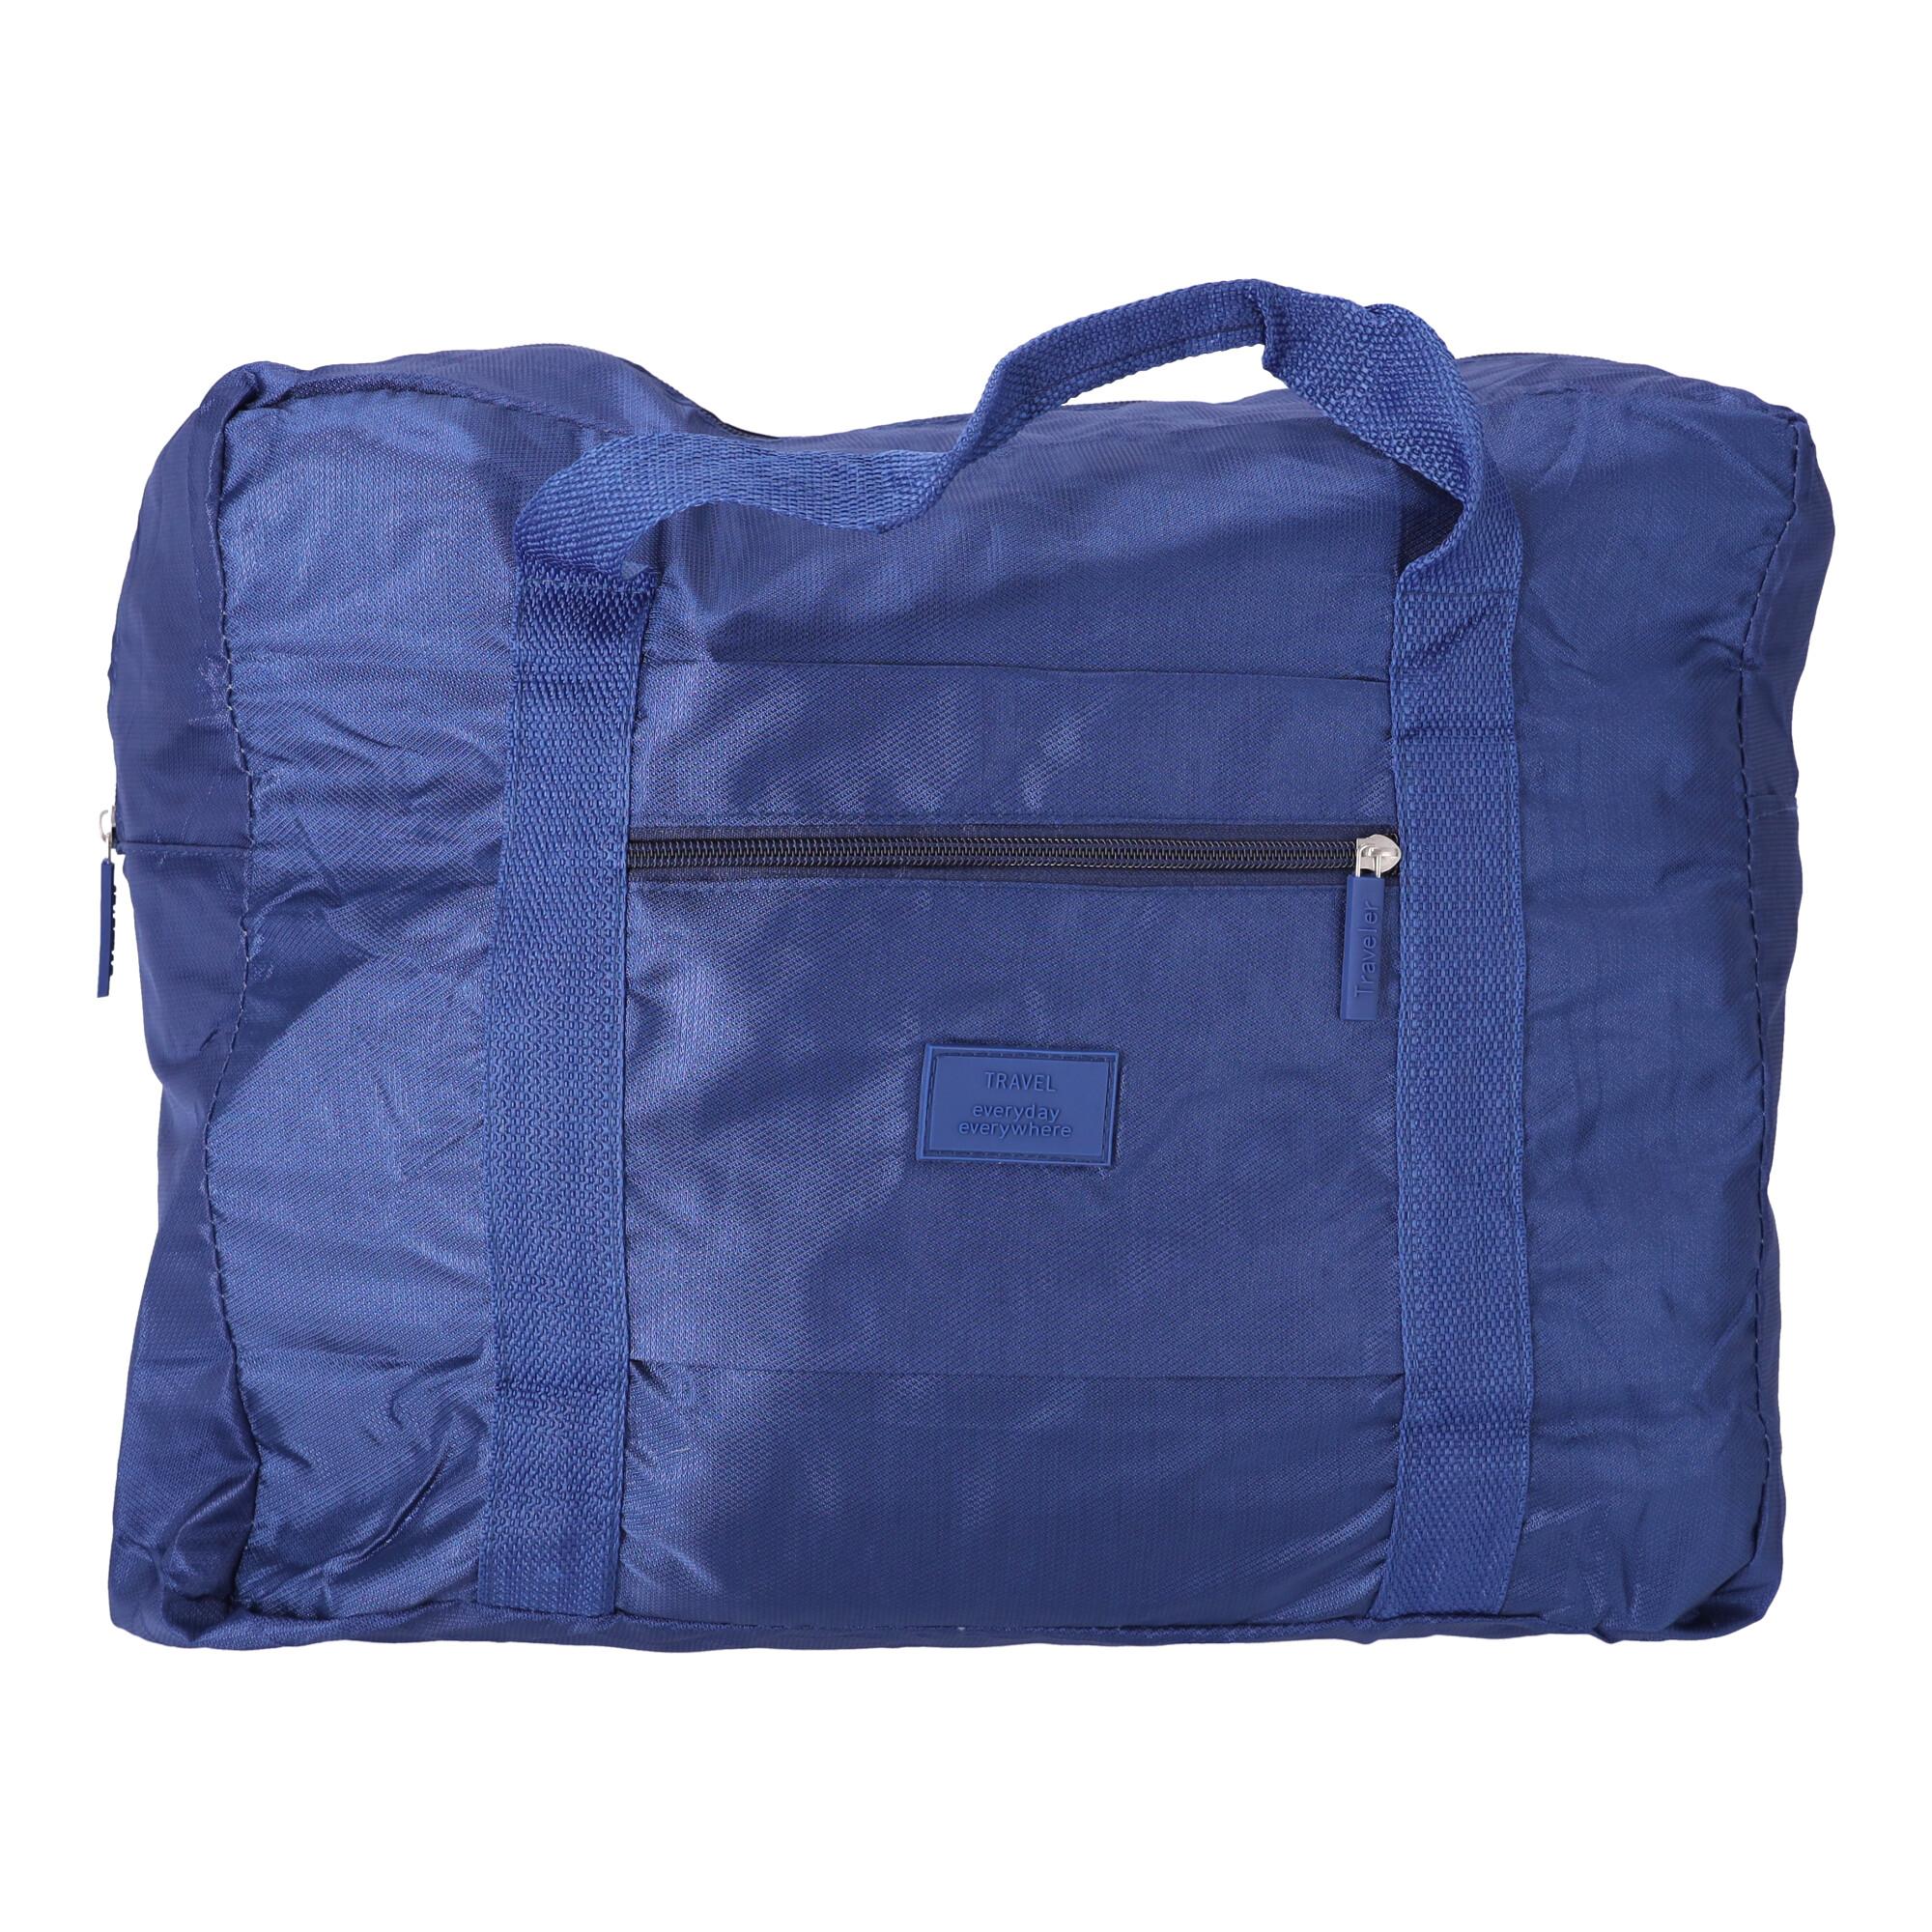 Classic travel, sports bag - navy blue